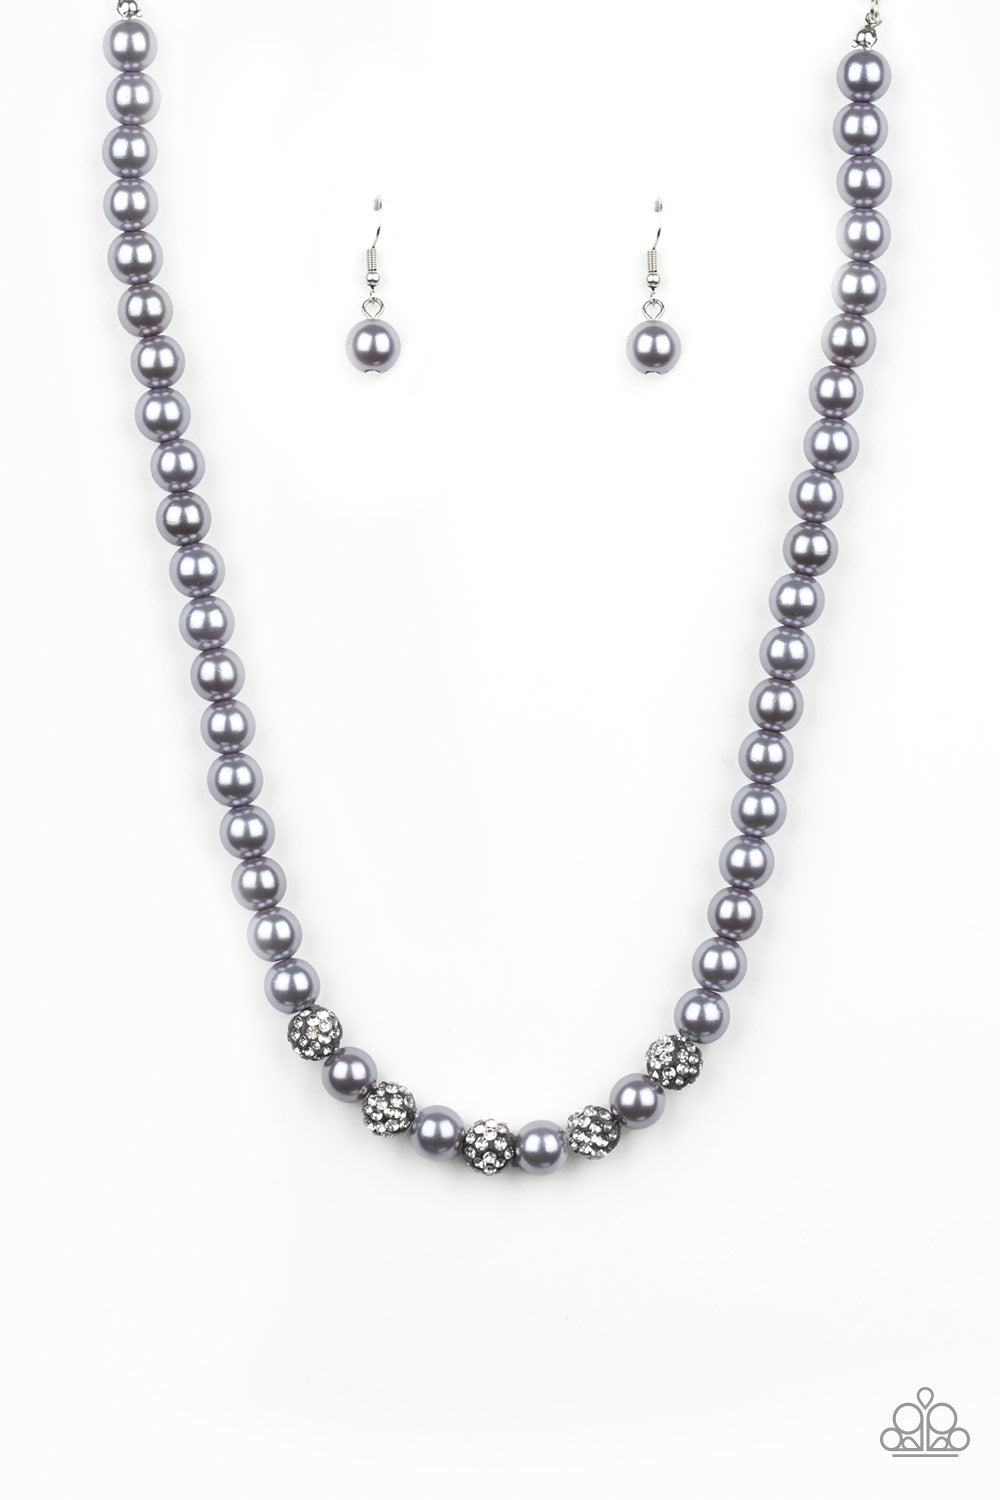 Posh Boss - Silver Necklace Set - Princess Glam Shop